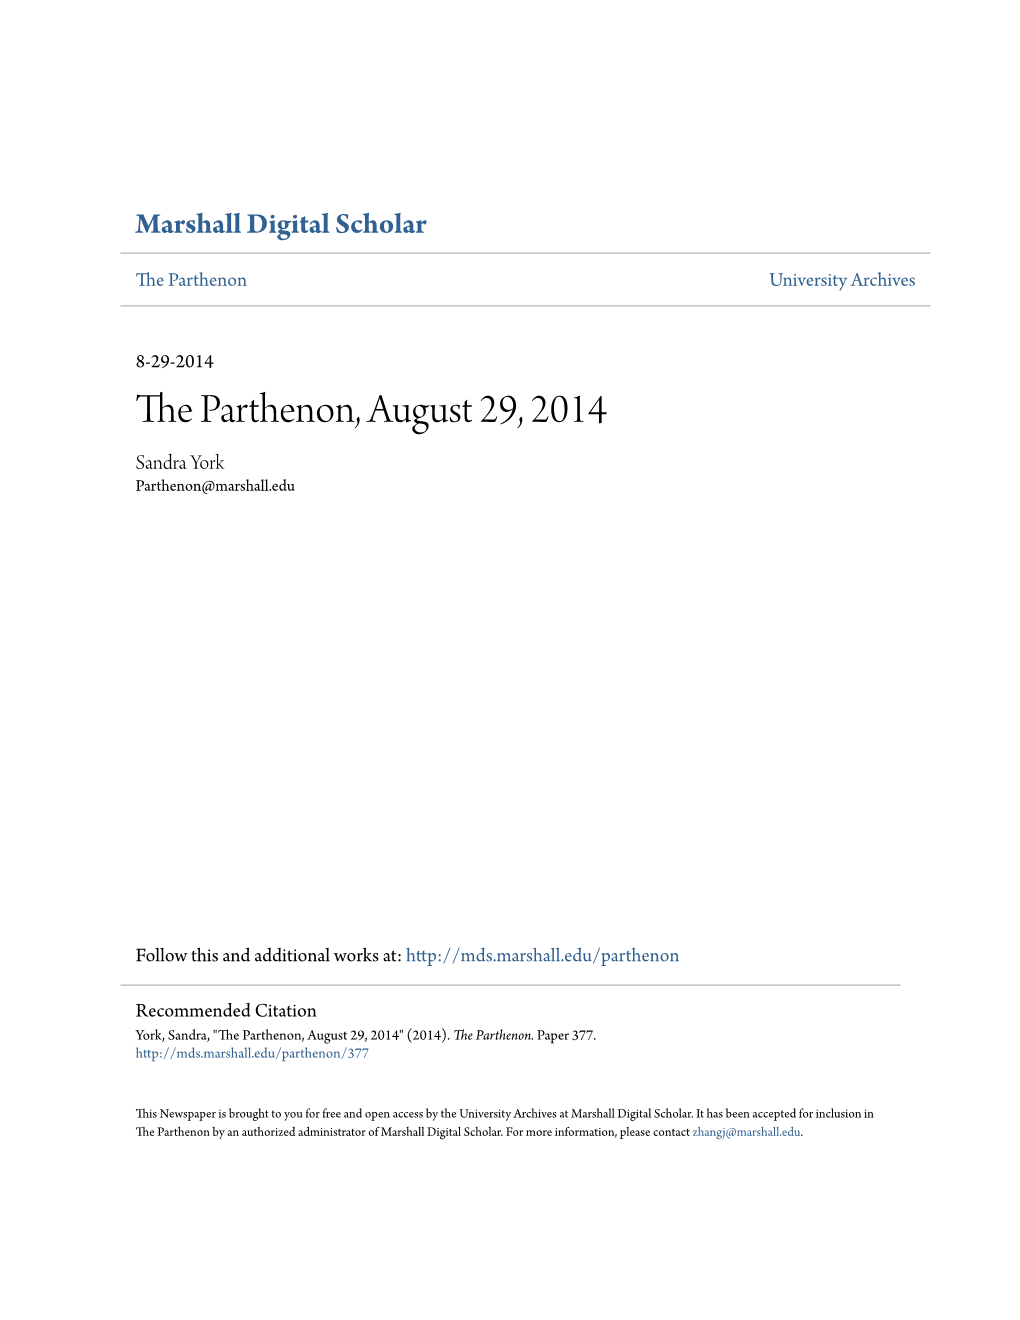 The Parthenon, August 29, 2014